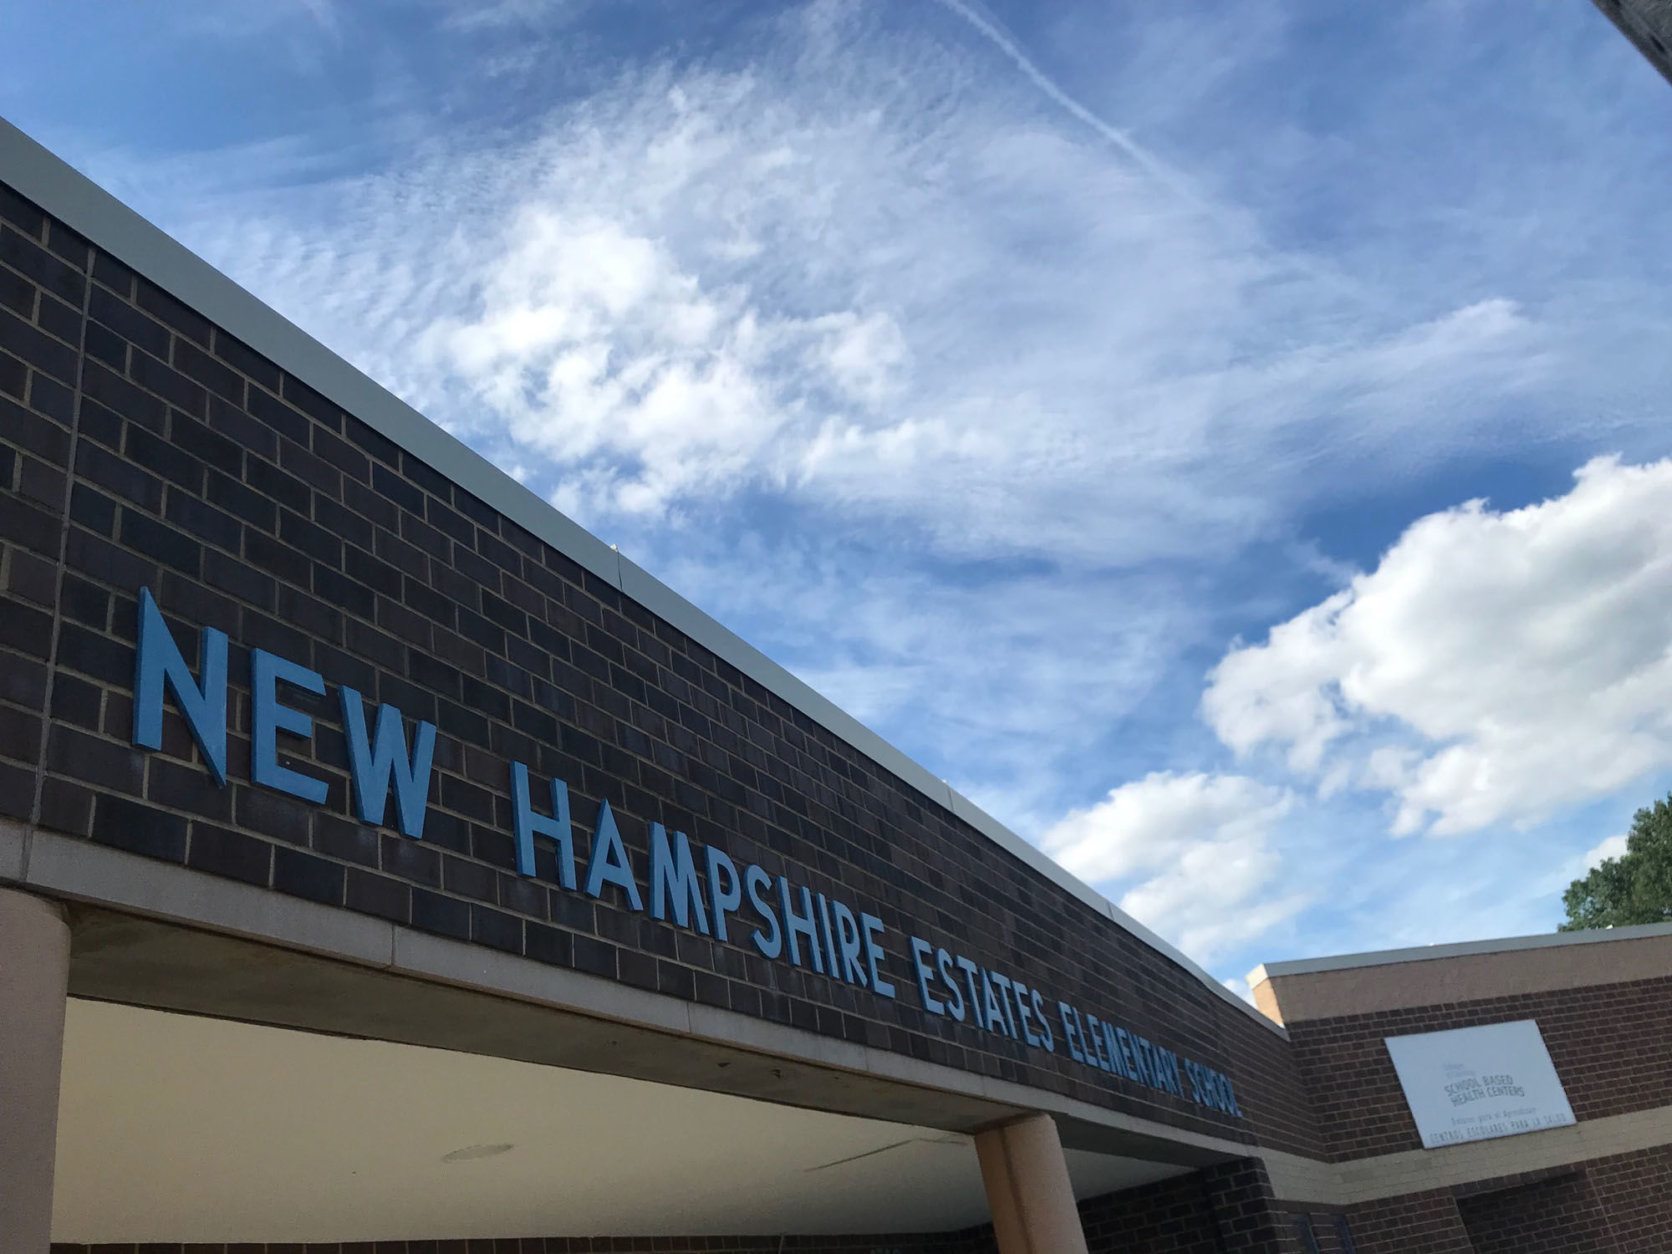 New Hamsphire  Estates Elementary School is located in Silver Spring, Maryland. (WTOP/Dick Uliano)